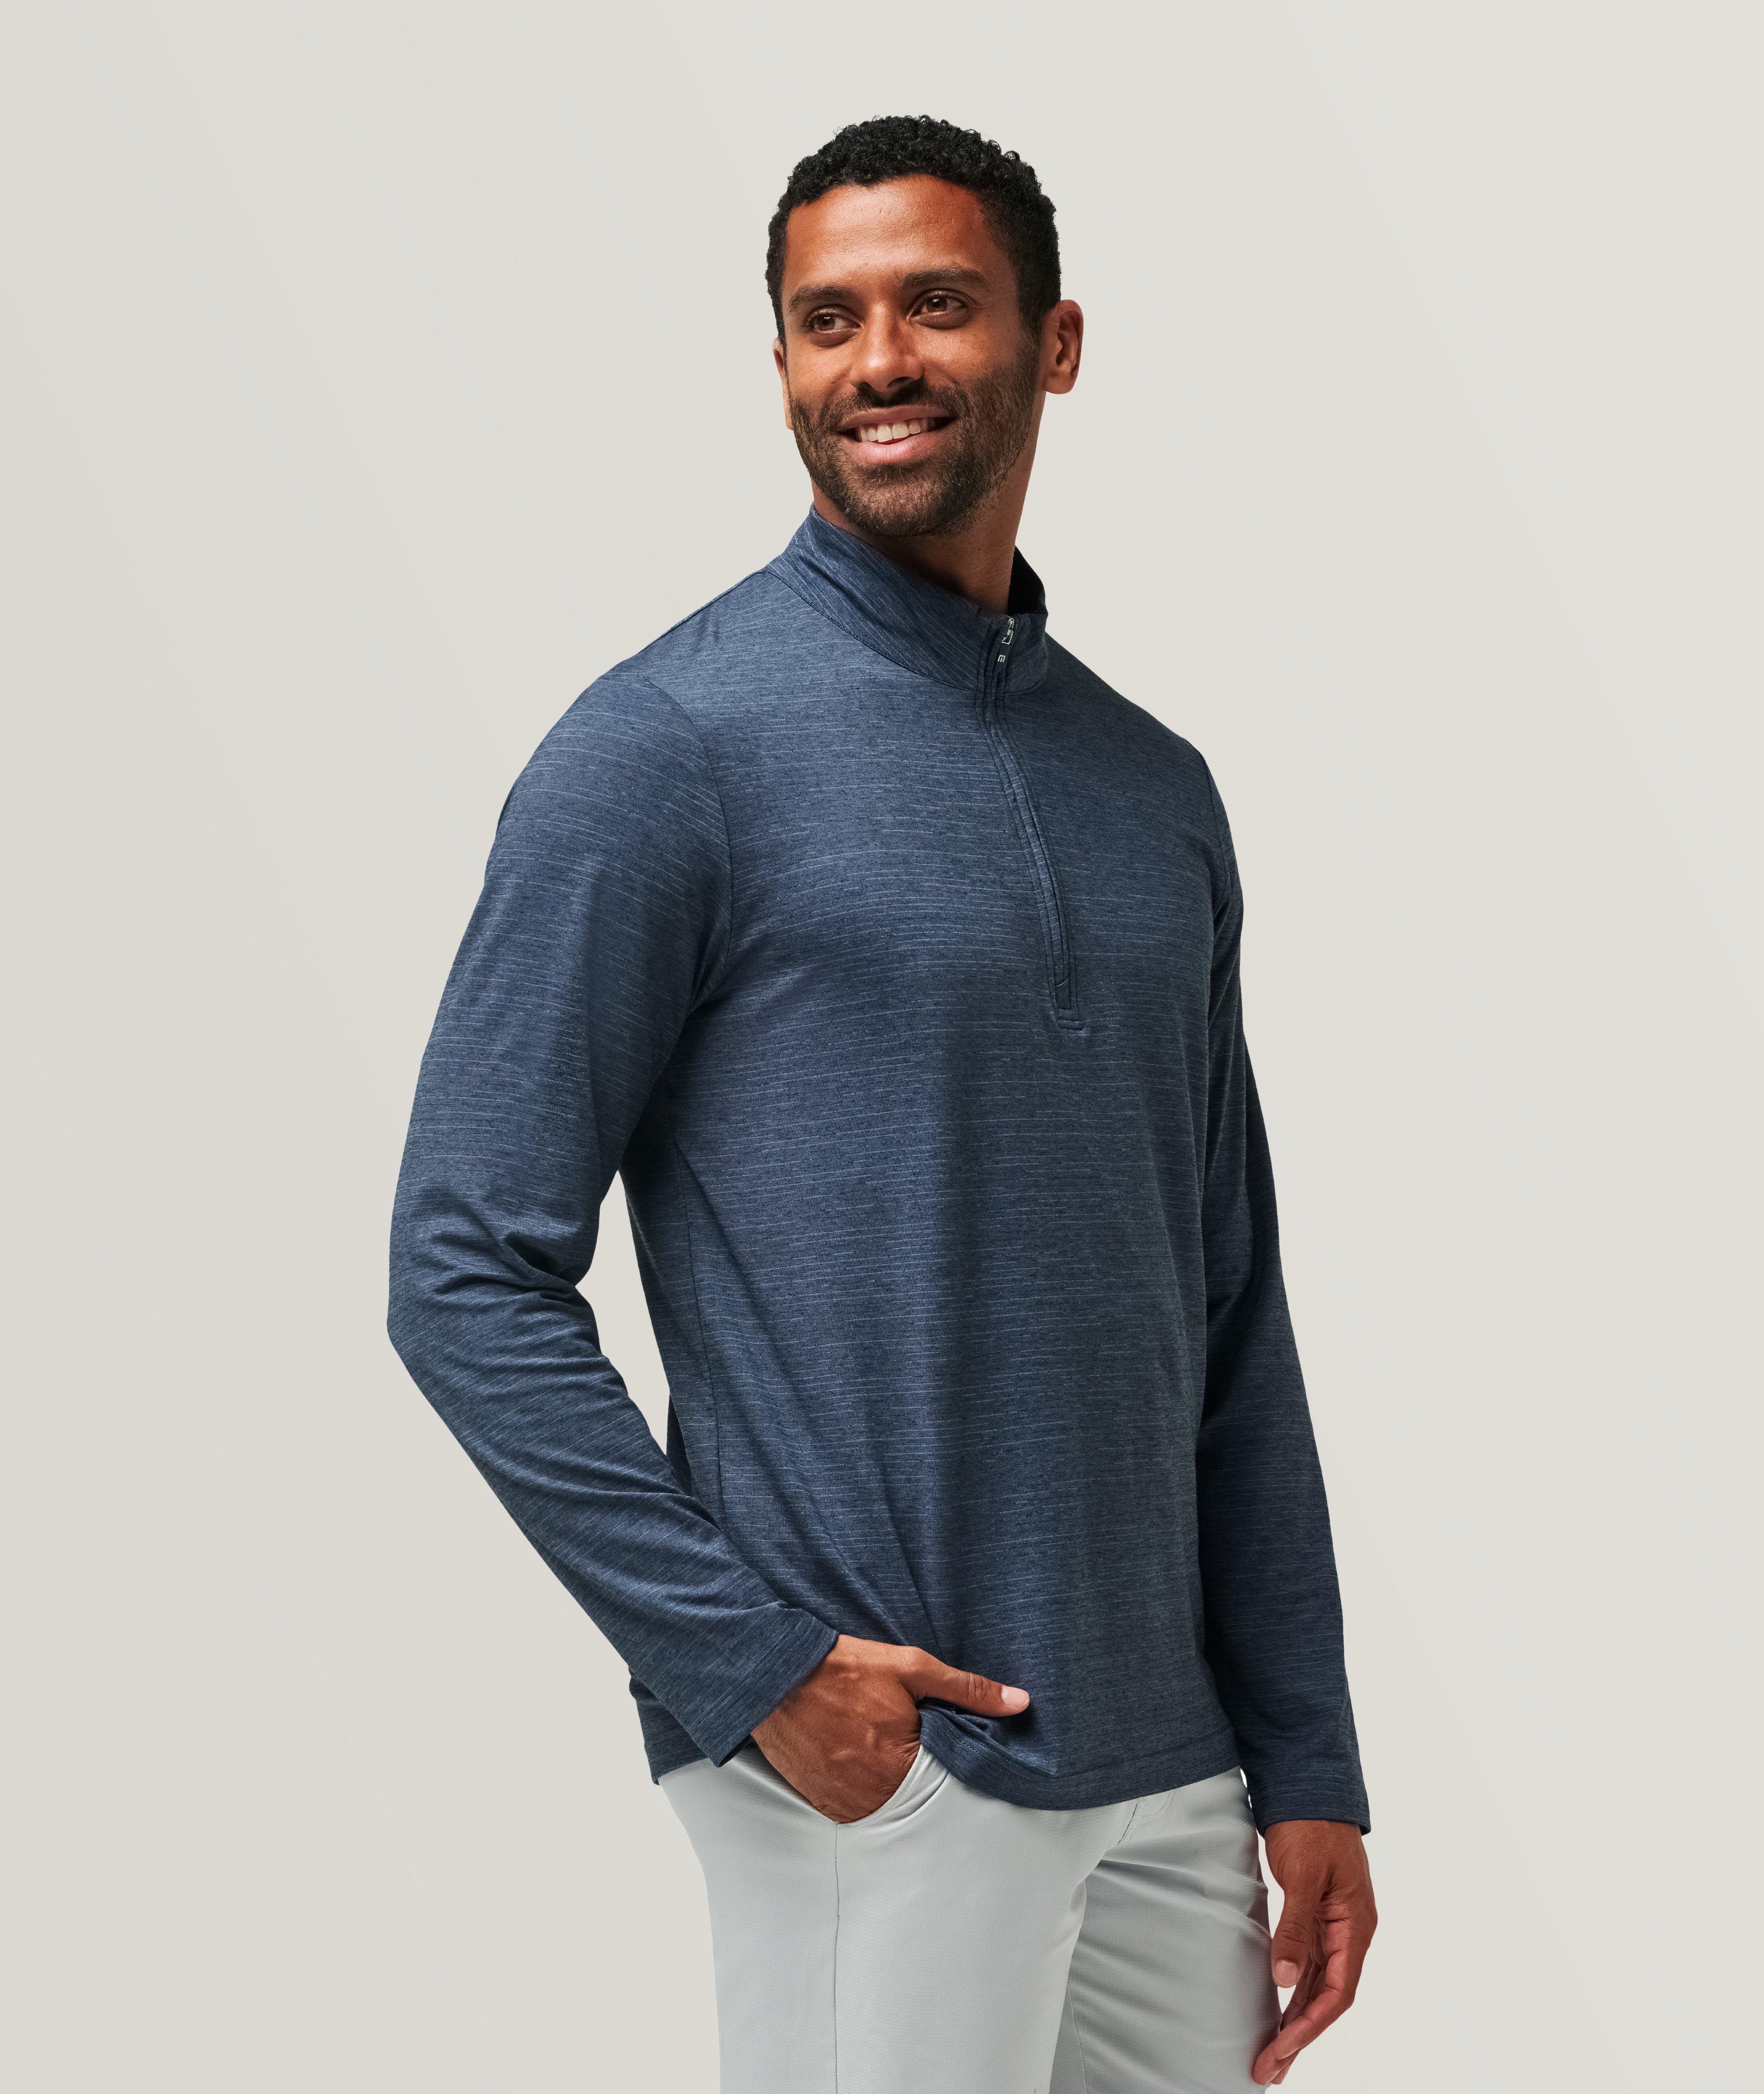 The Heater Quarter-Zip Sweater